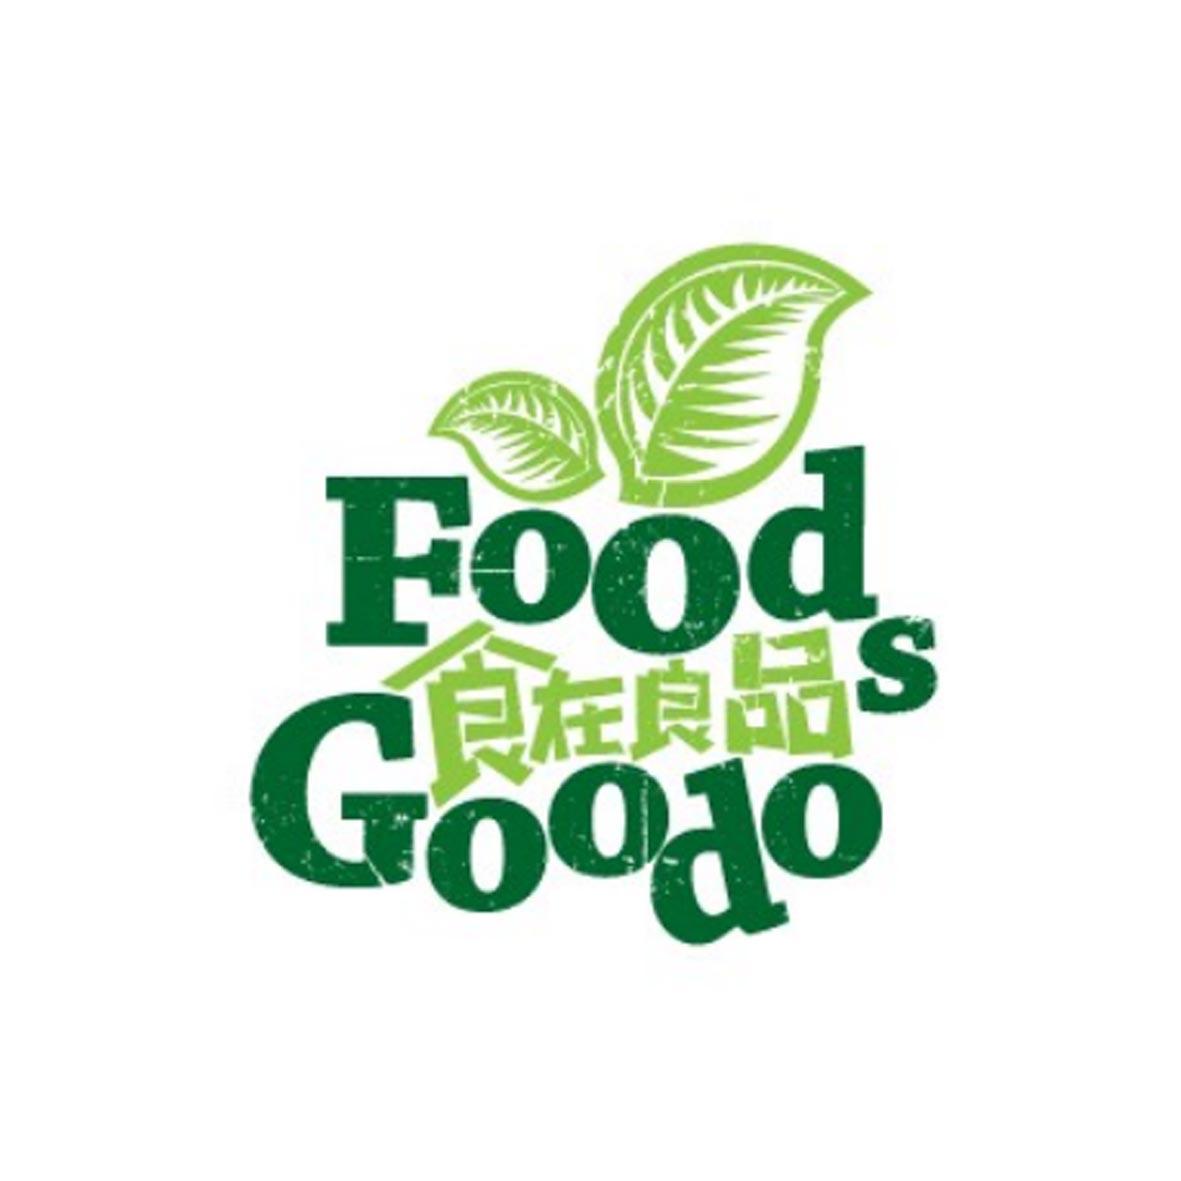 食在良品 foods goodo 商标公告